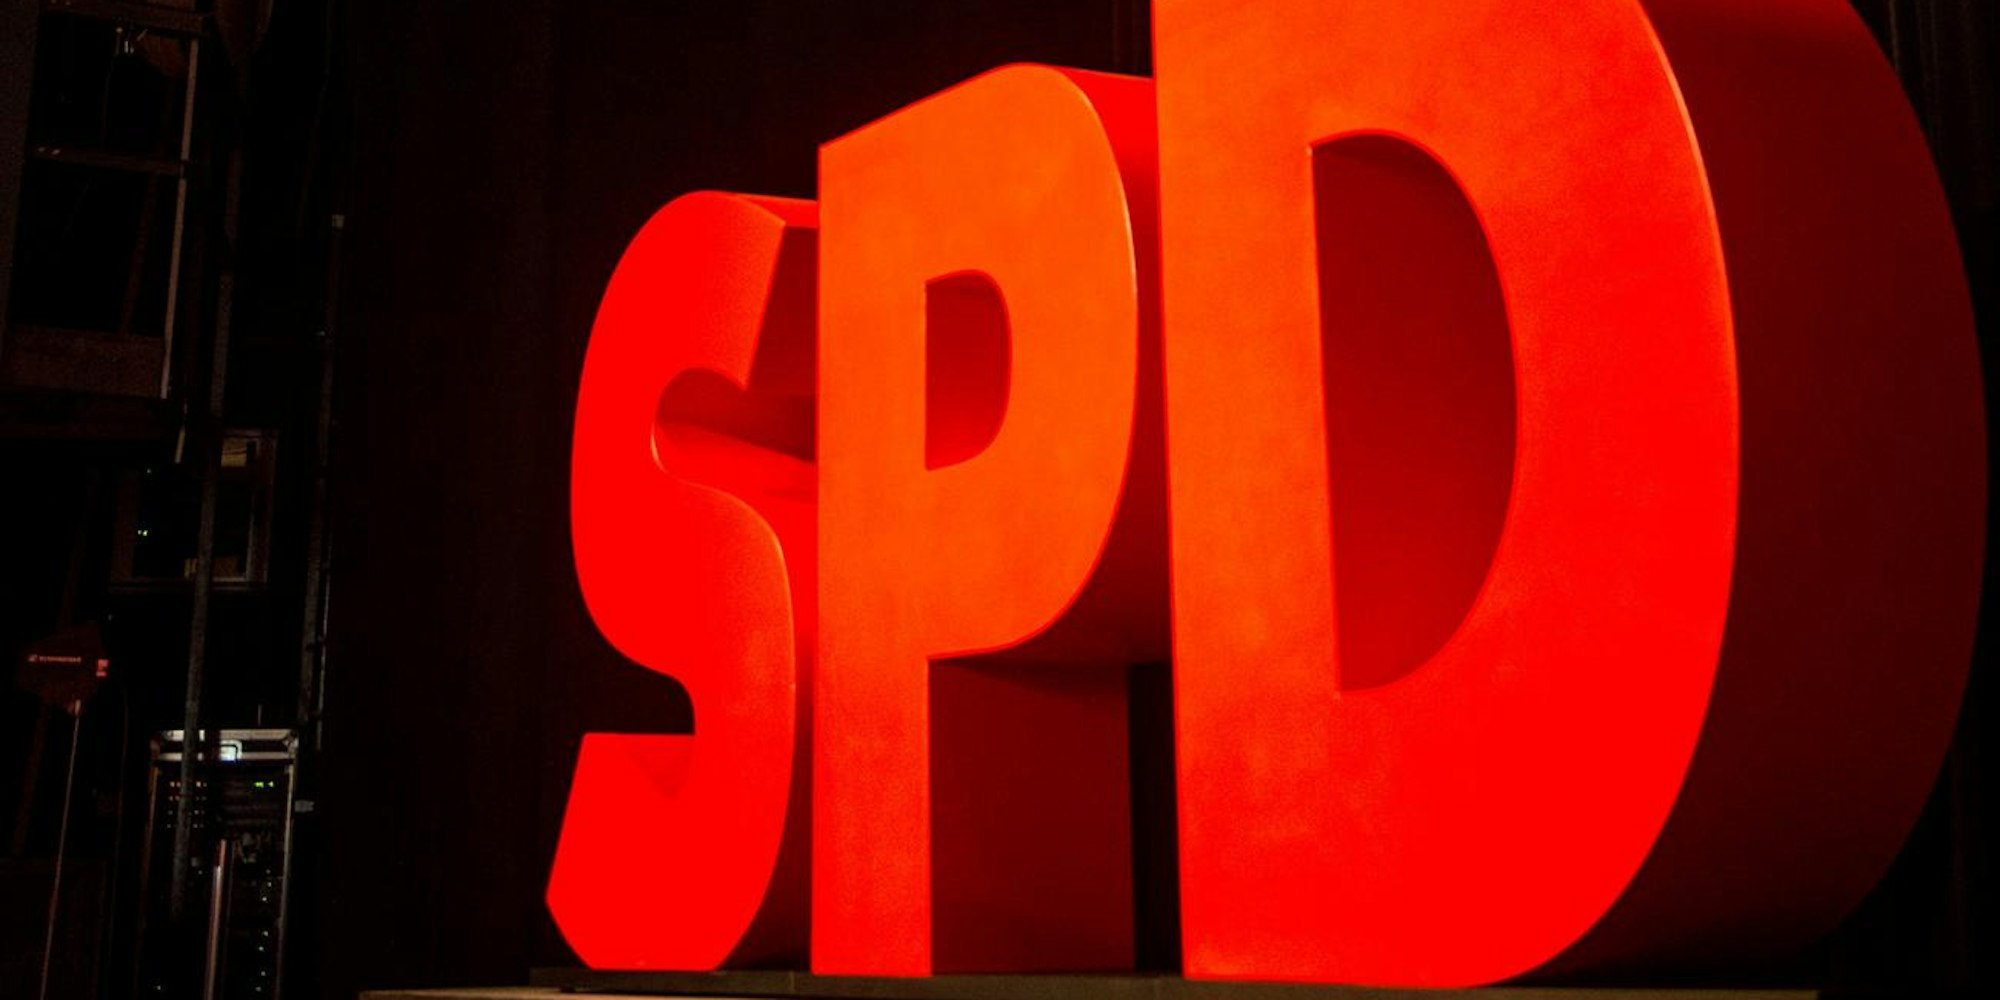 SPD Symbol